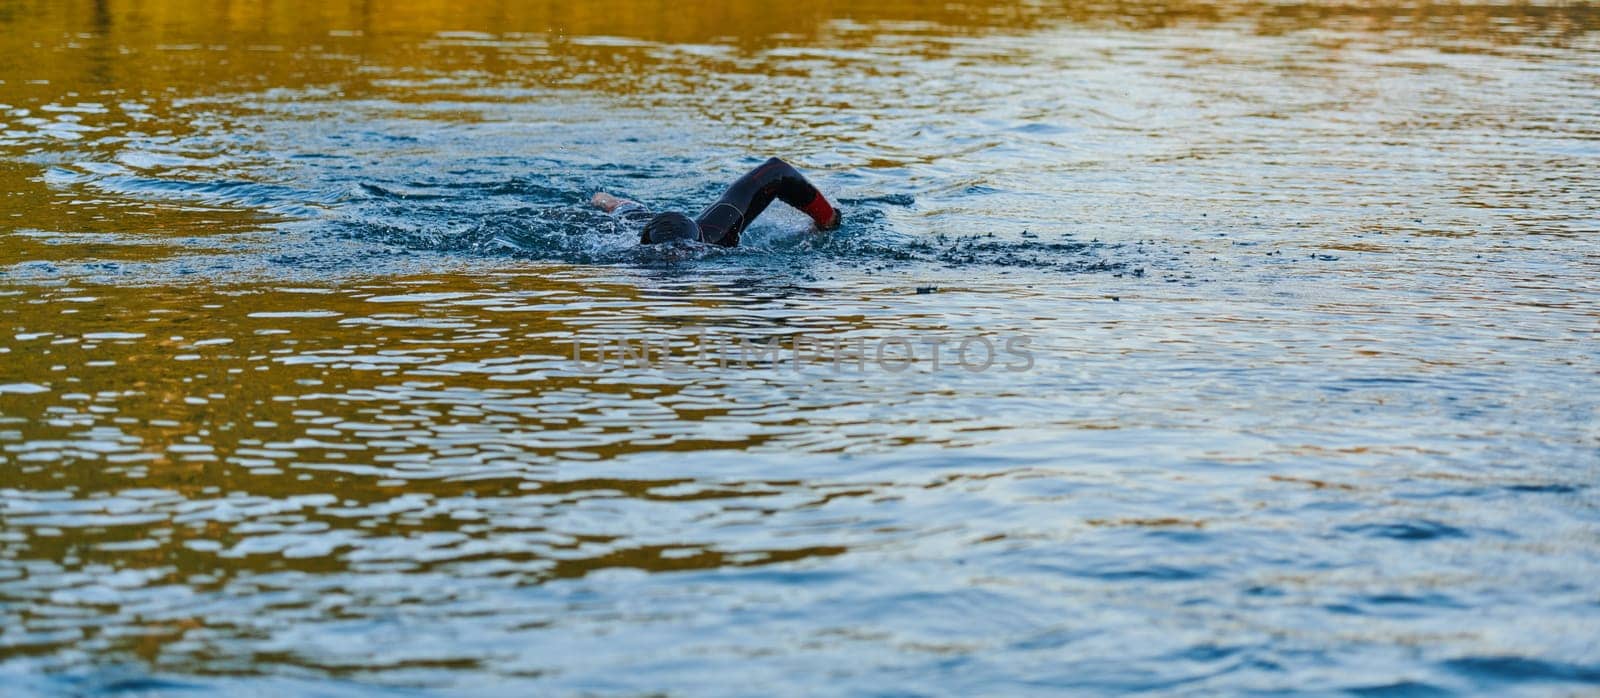 Triathlon athlete swimming on lake in sunrise wearing wetsuit by dotshock